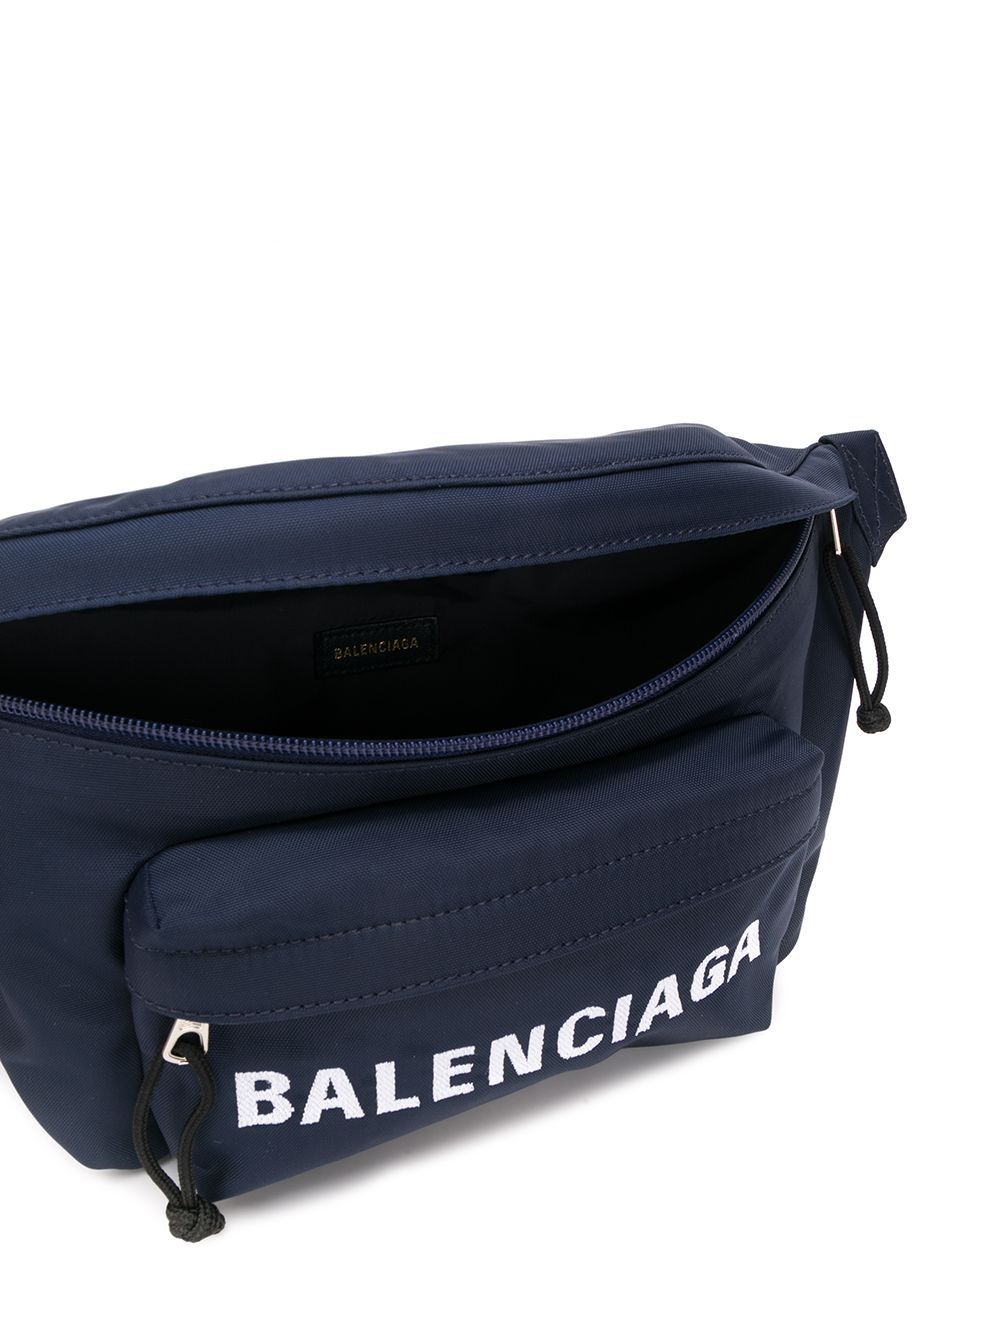 фото Balenciaga поясная сумка wheel